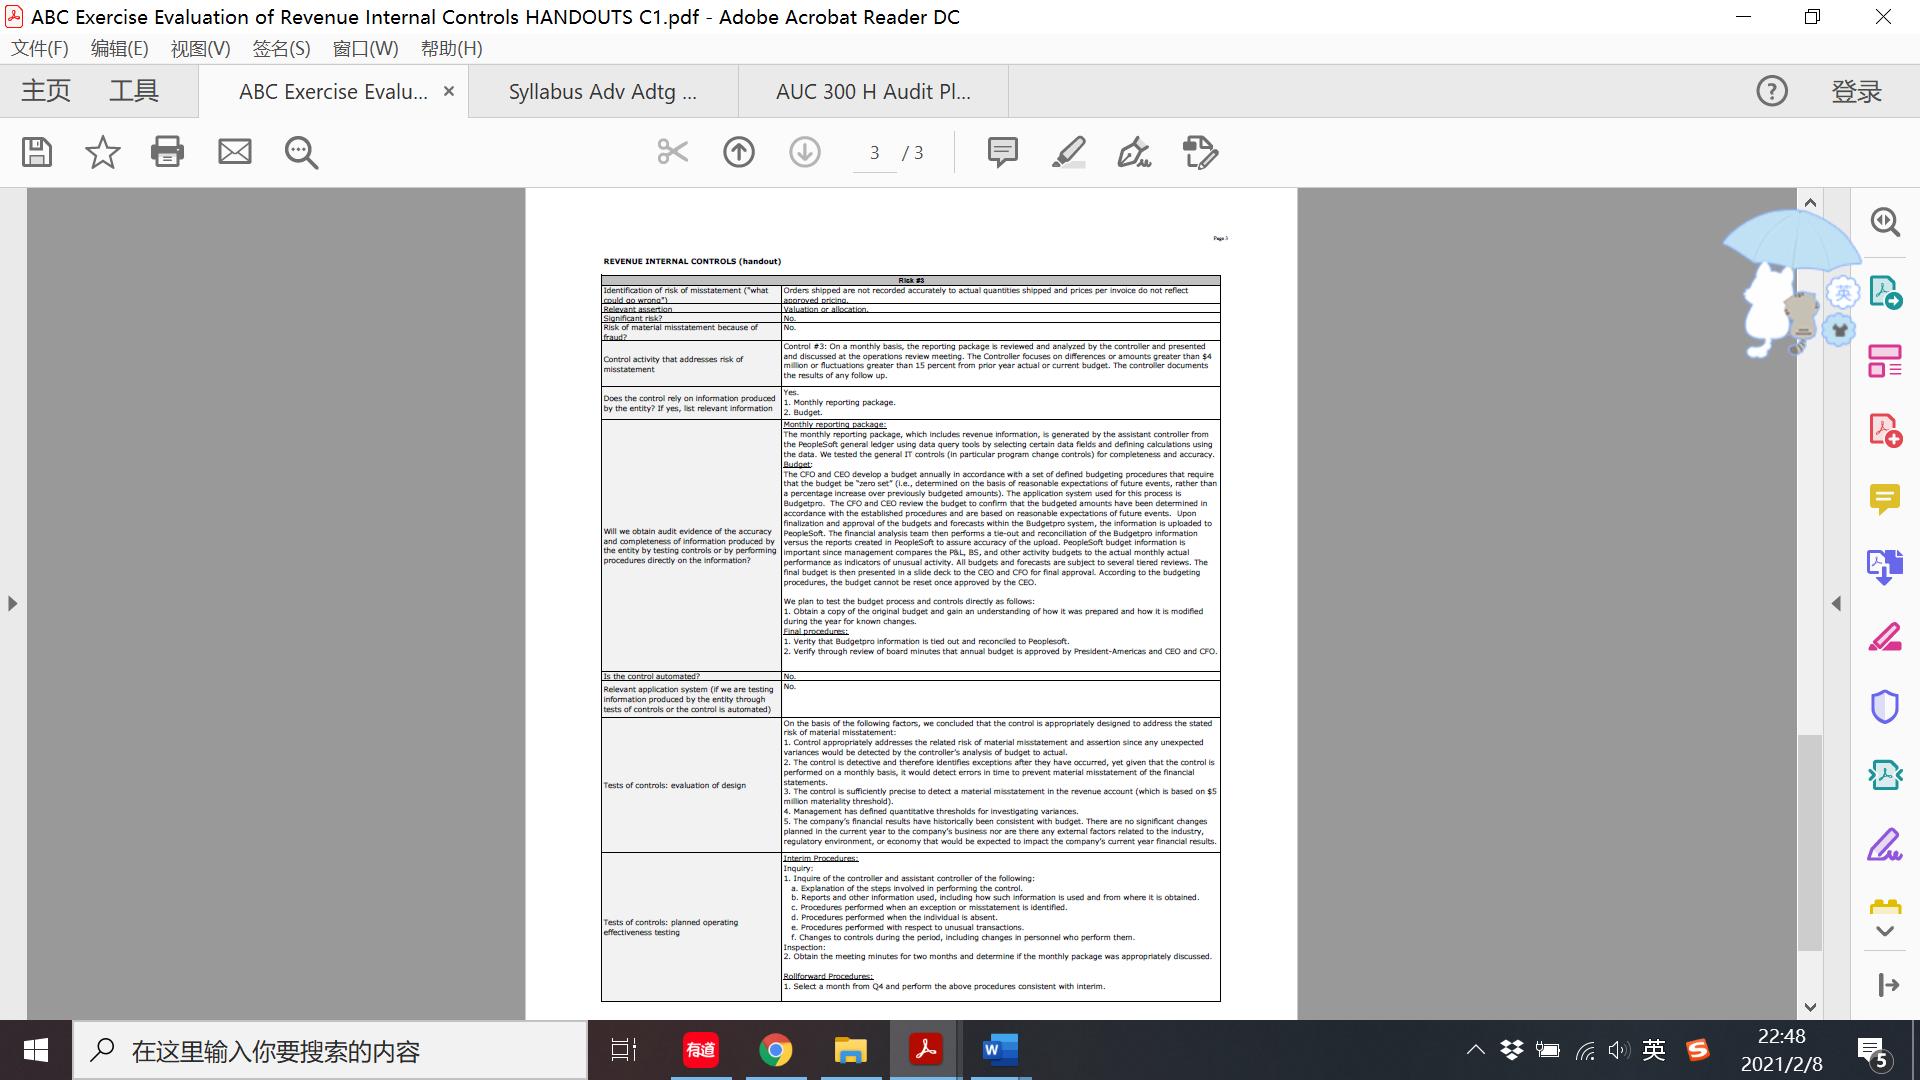 ABC Exercise Evaluation of Revenue Internal Controls HANDOUTS C1.pdf - Adobe Acrobat Reader DC (F) (E) (V)